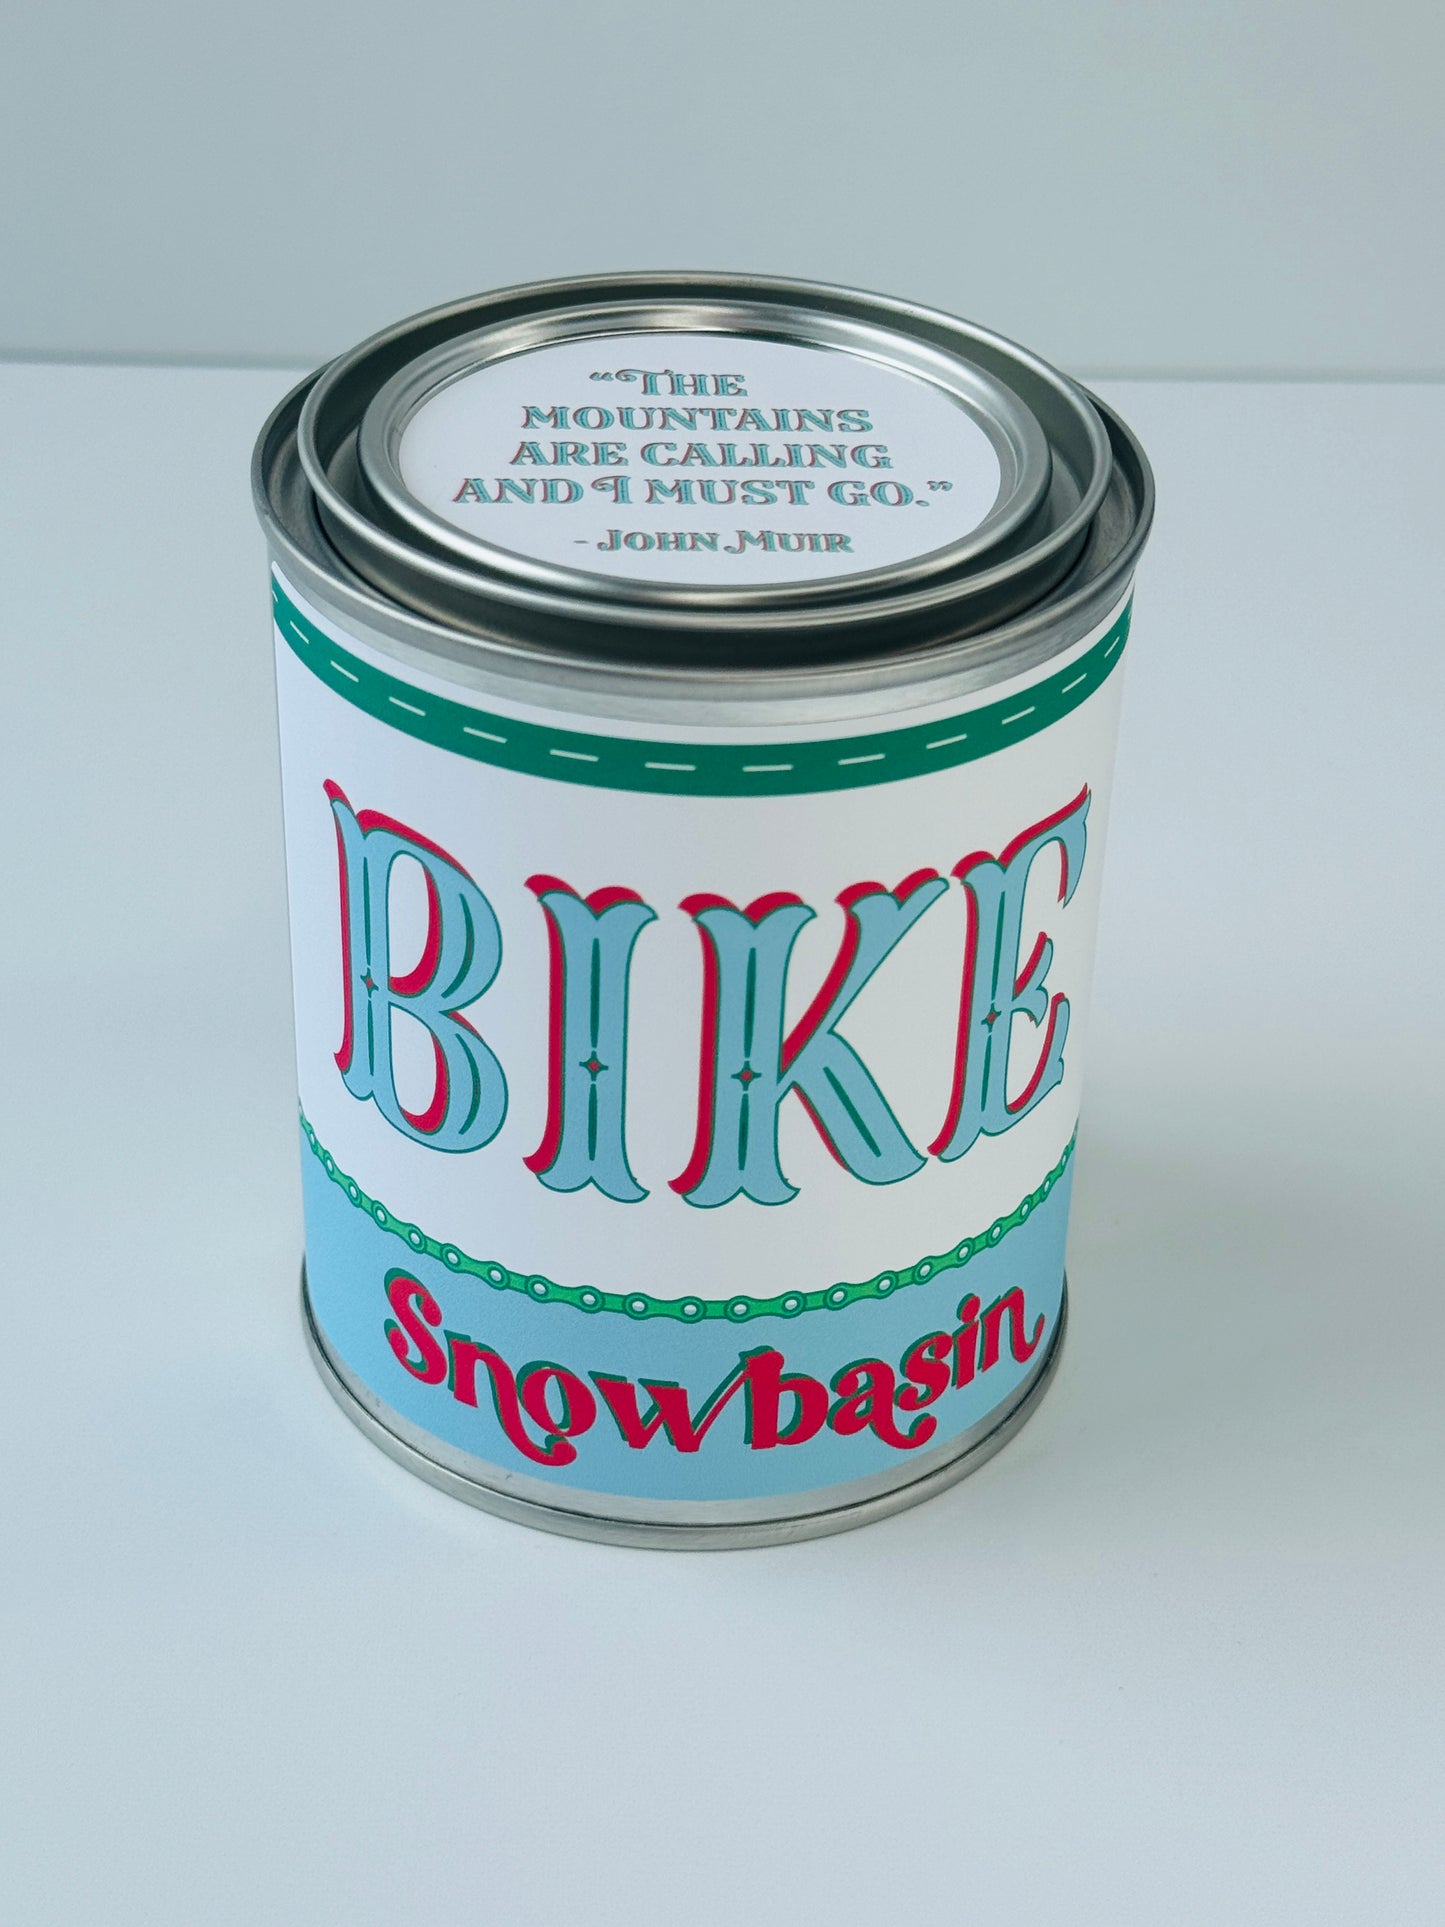 Bike Snowbasin - Paint Tin Candle